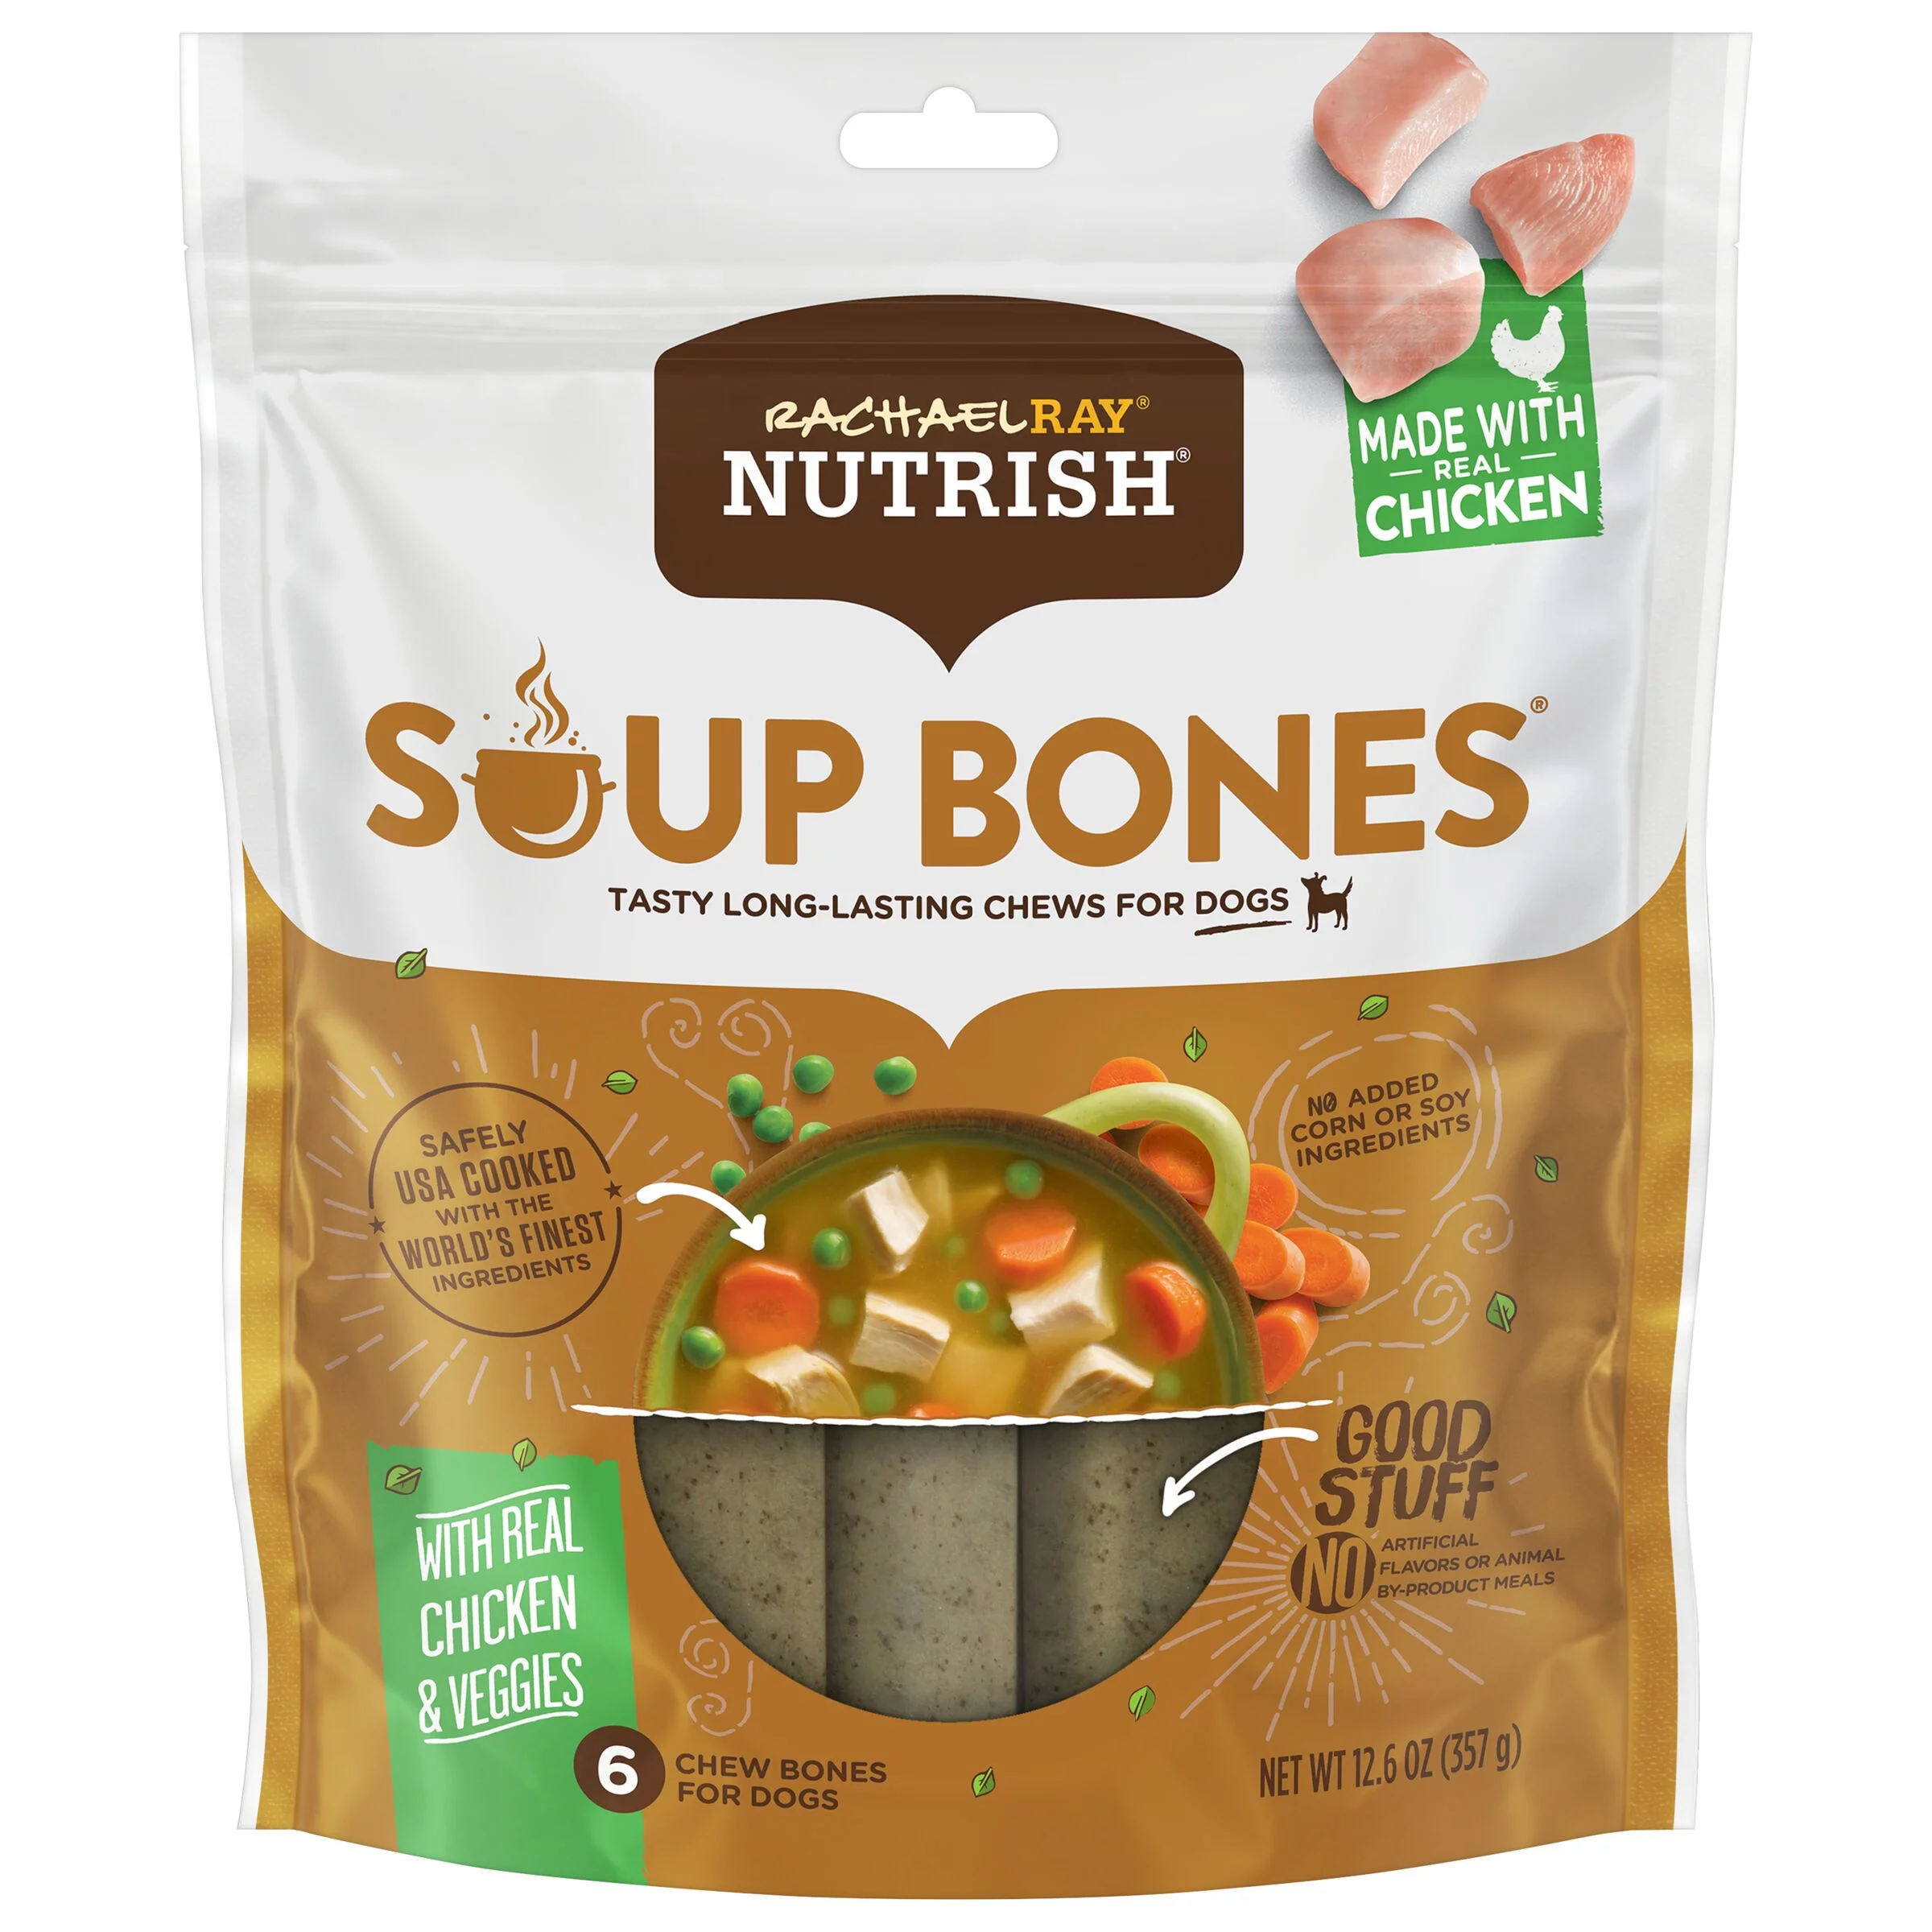 Rachael Ray Nutrish Soup Bones Dog Chews With Real Chicken & Veggies, 6 Dog Chews